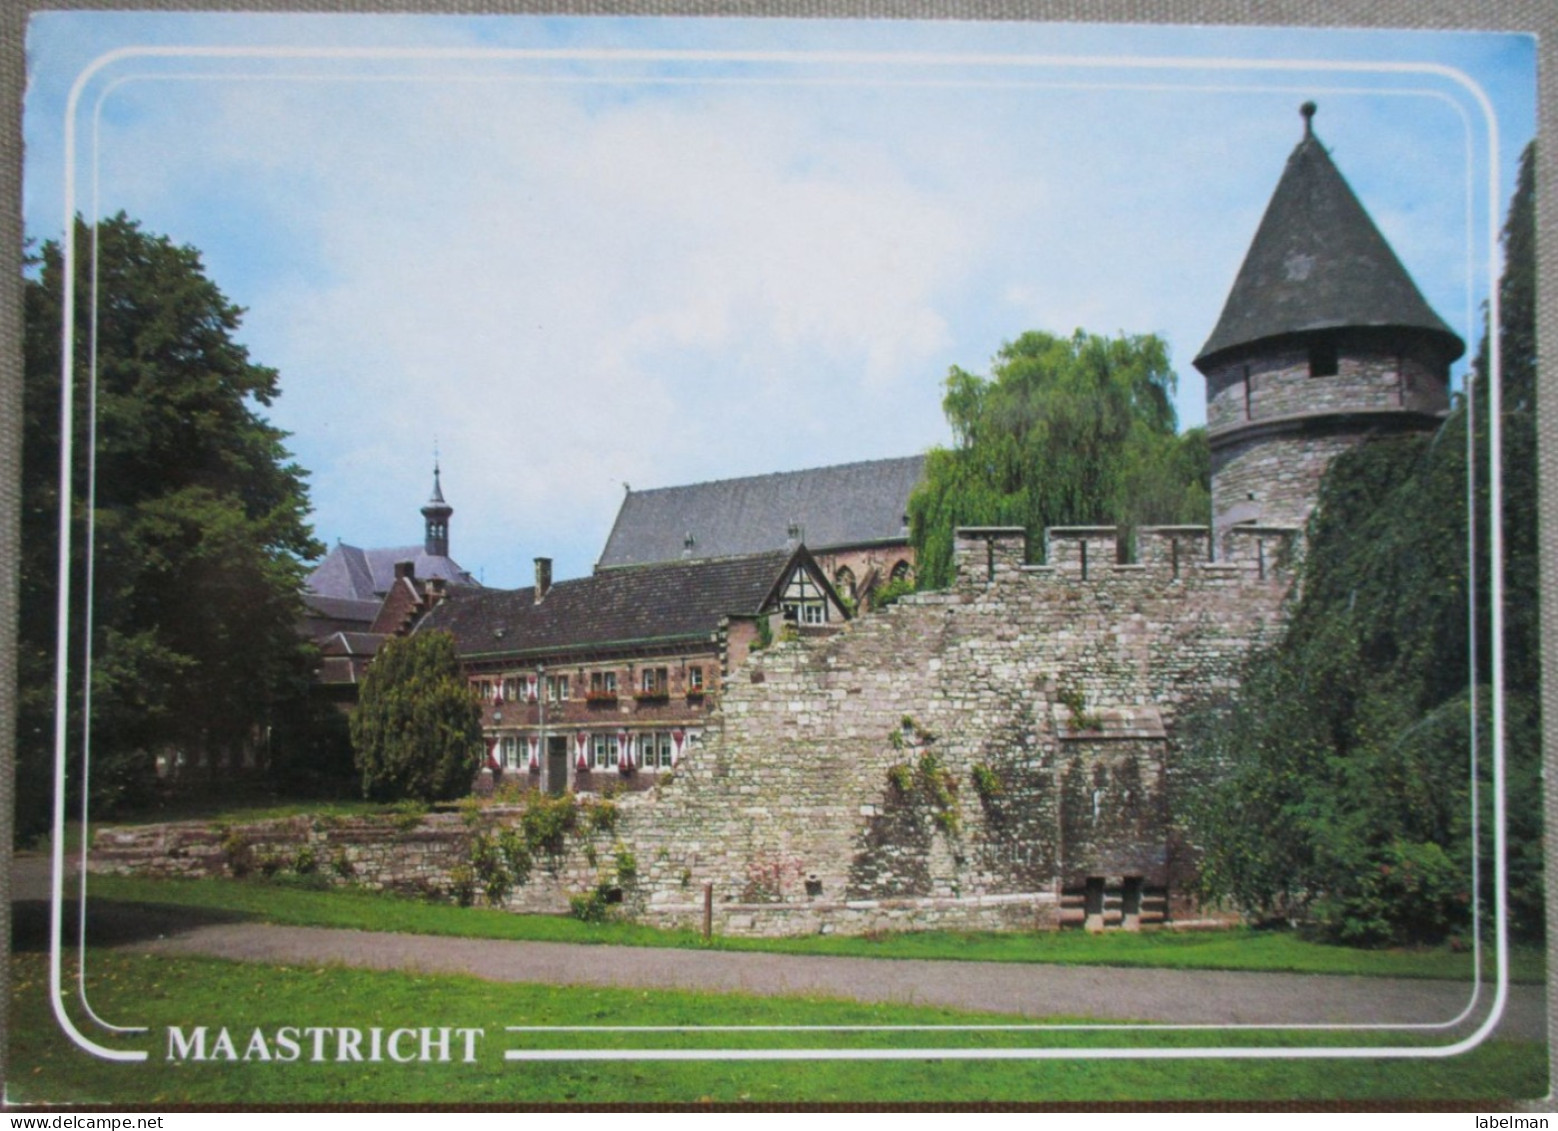 HOLLAND NETHERLAND MAASTRICHT FALIEZUSTER PARK MONASTERY POSTCARD CARTOLINA ANSICHTSKARTE CARTE POSTALE POSTKARTE CARD - Maastricht